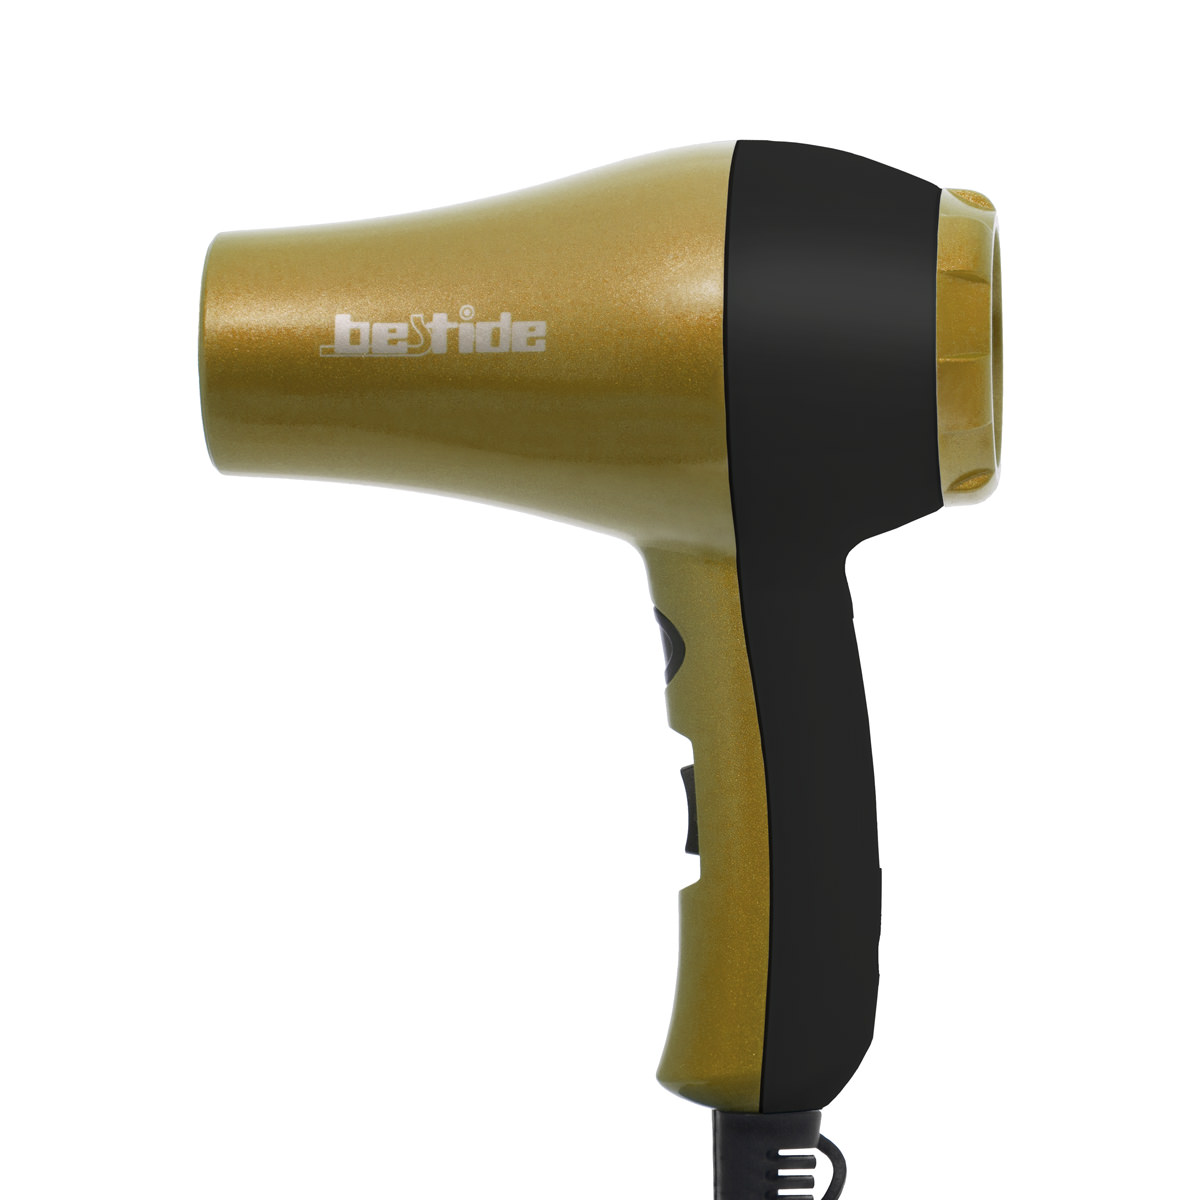 Bestide – A65 Mini Travel Hair Dryer Gold 350W #01